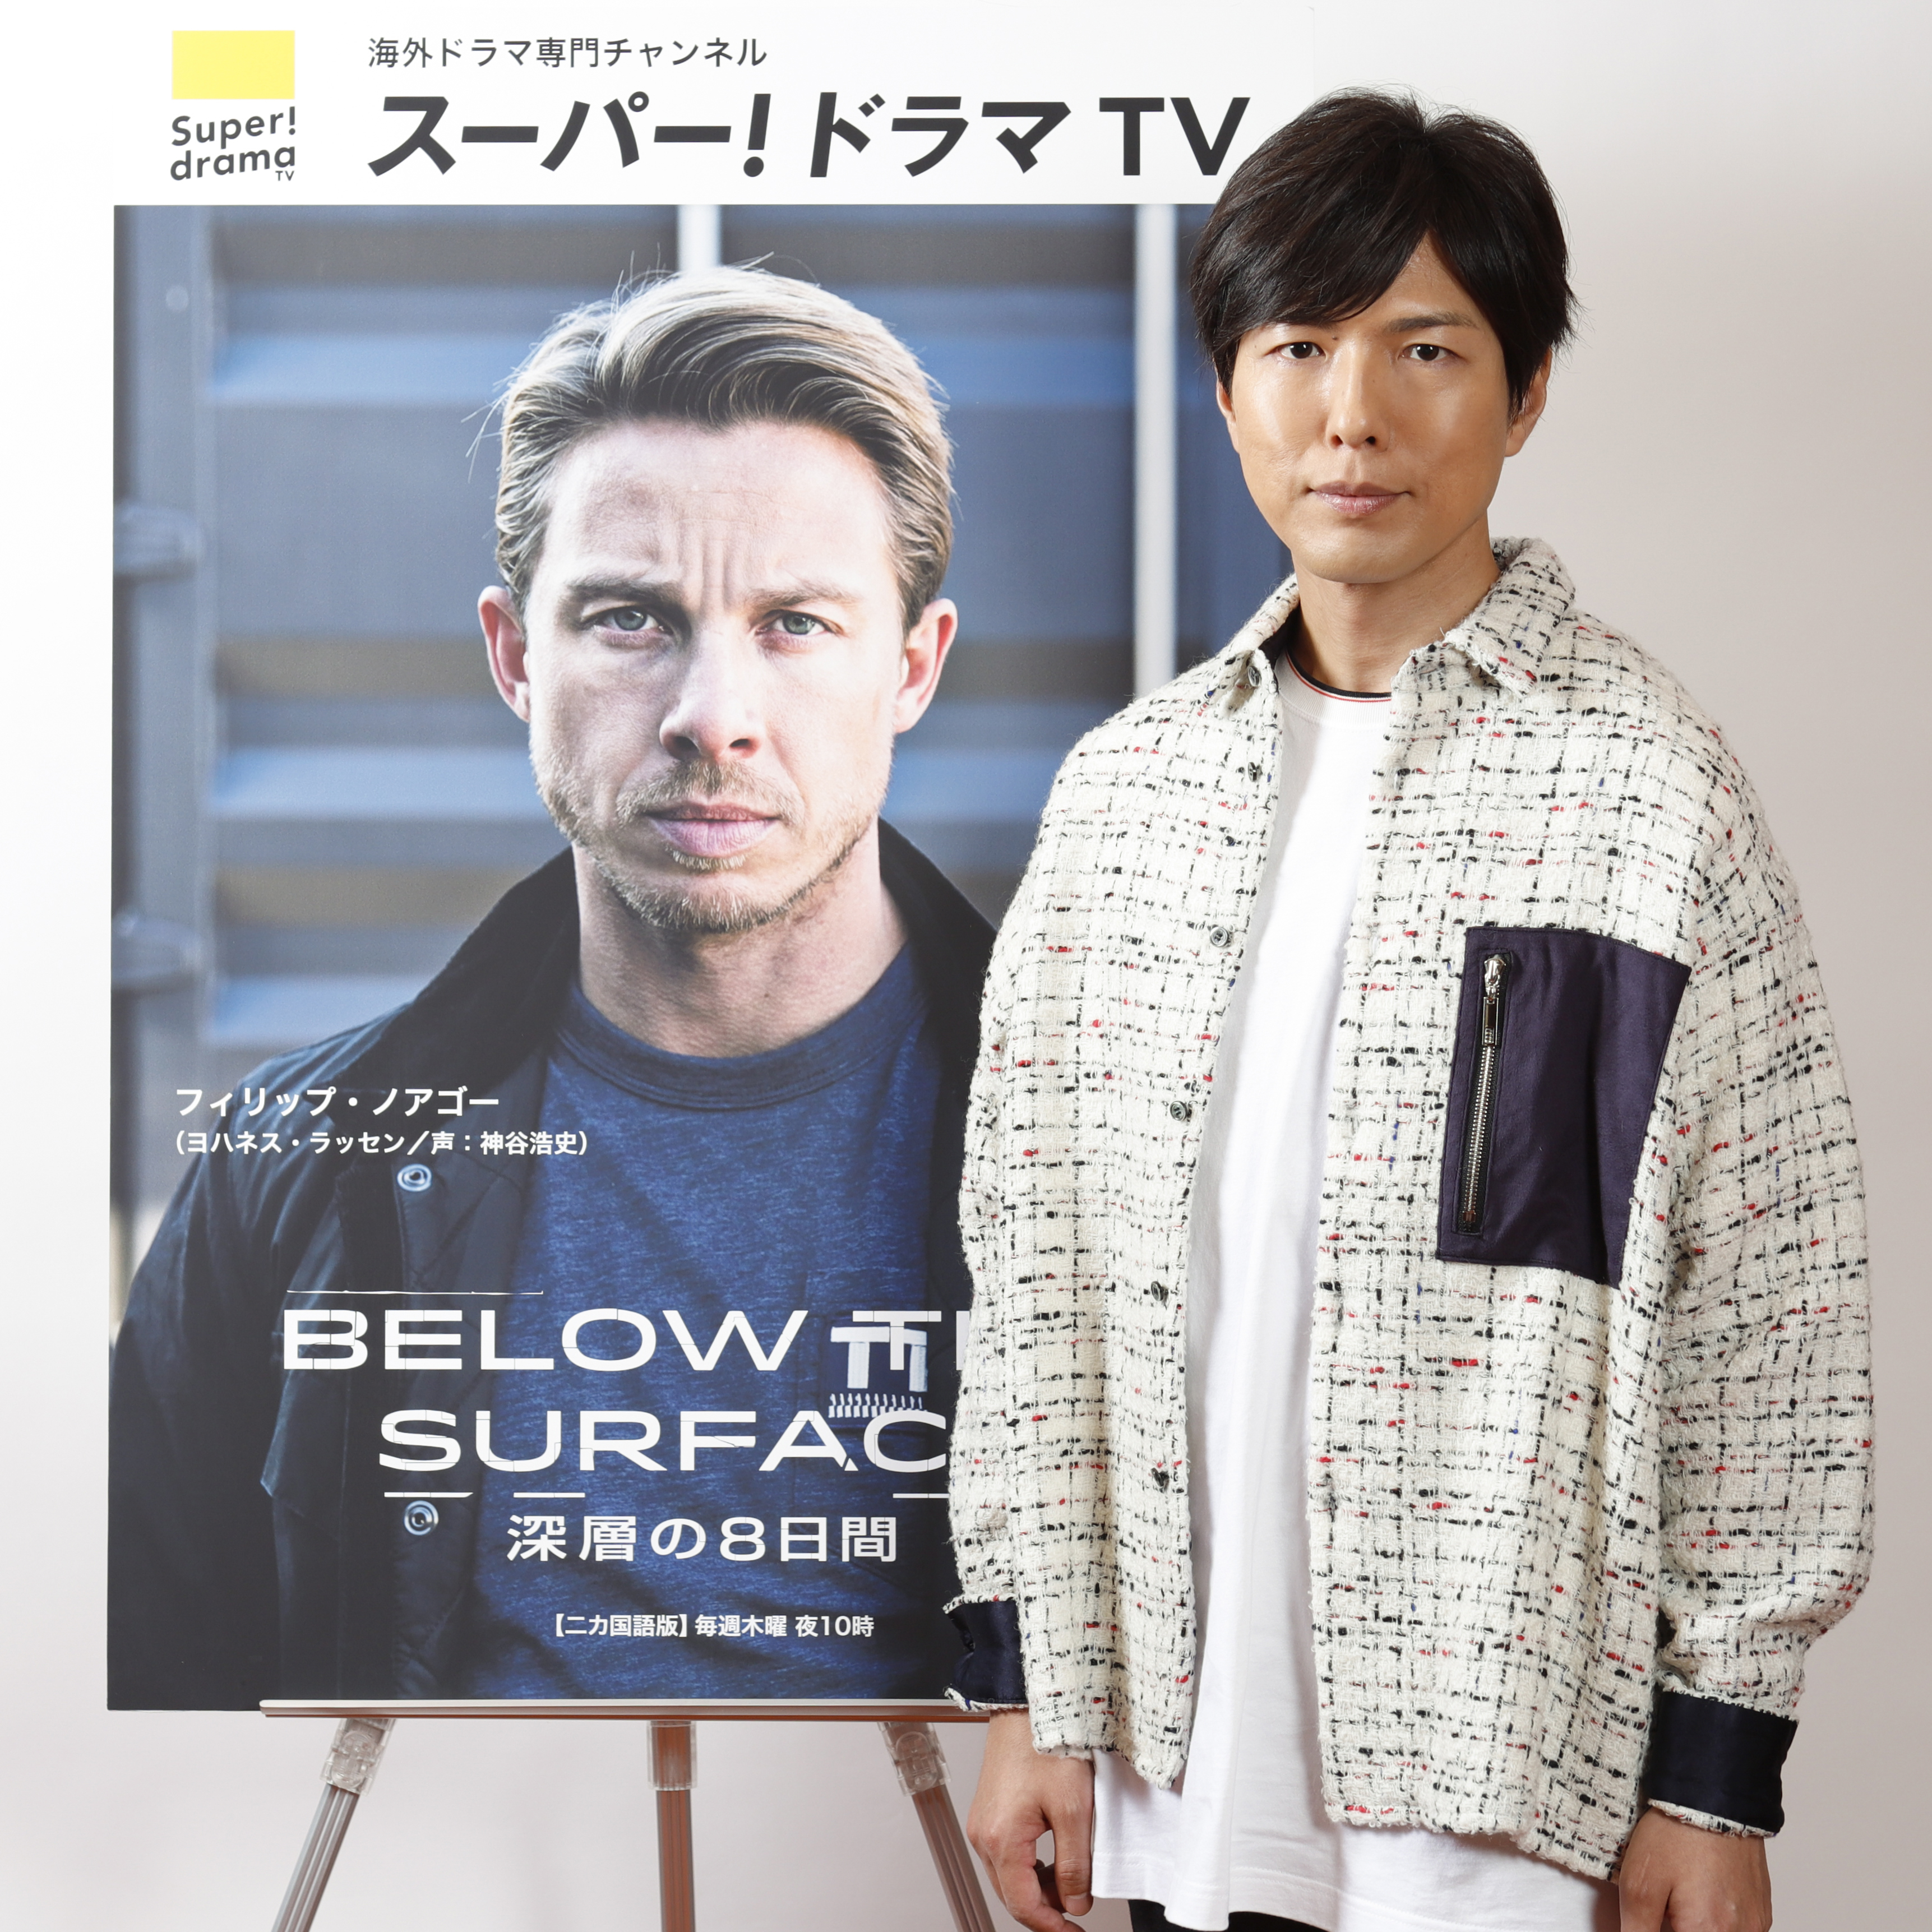 「BELOW THE SURFACE 深層の8日間」主人公役のボイスキャスト、神谷浩史がNHK総合「プロフェッショナル仕事の流儀」に出演決定！